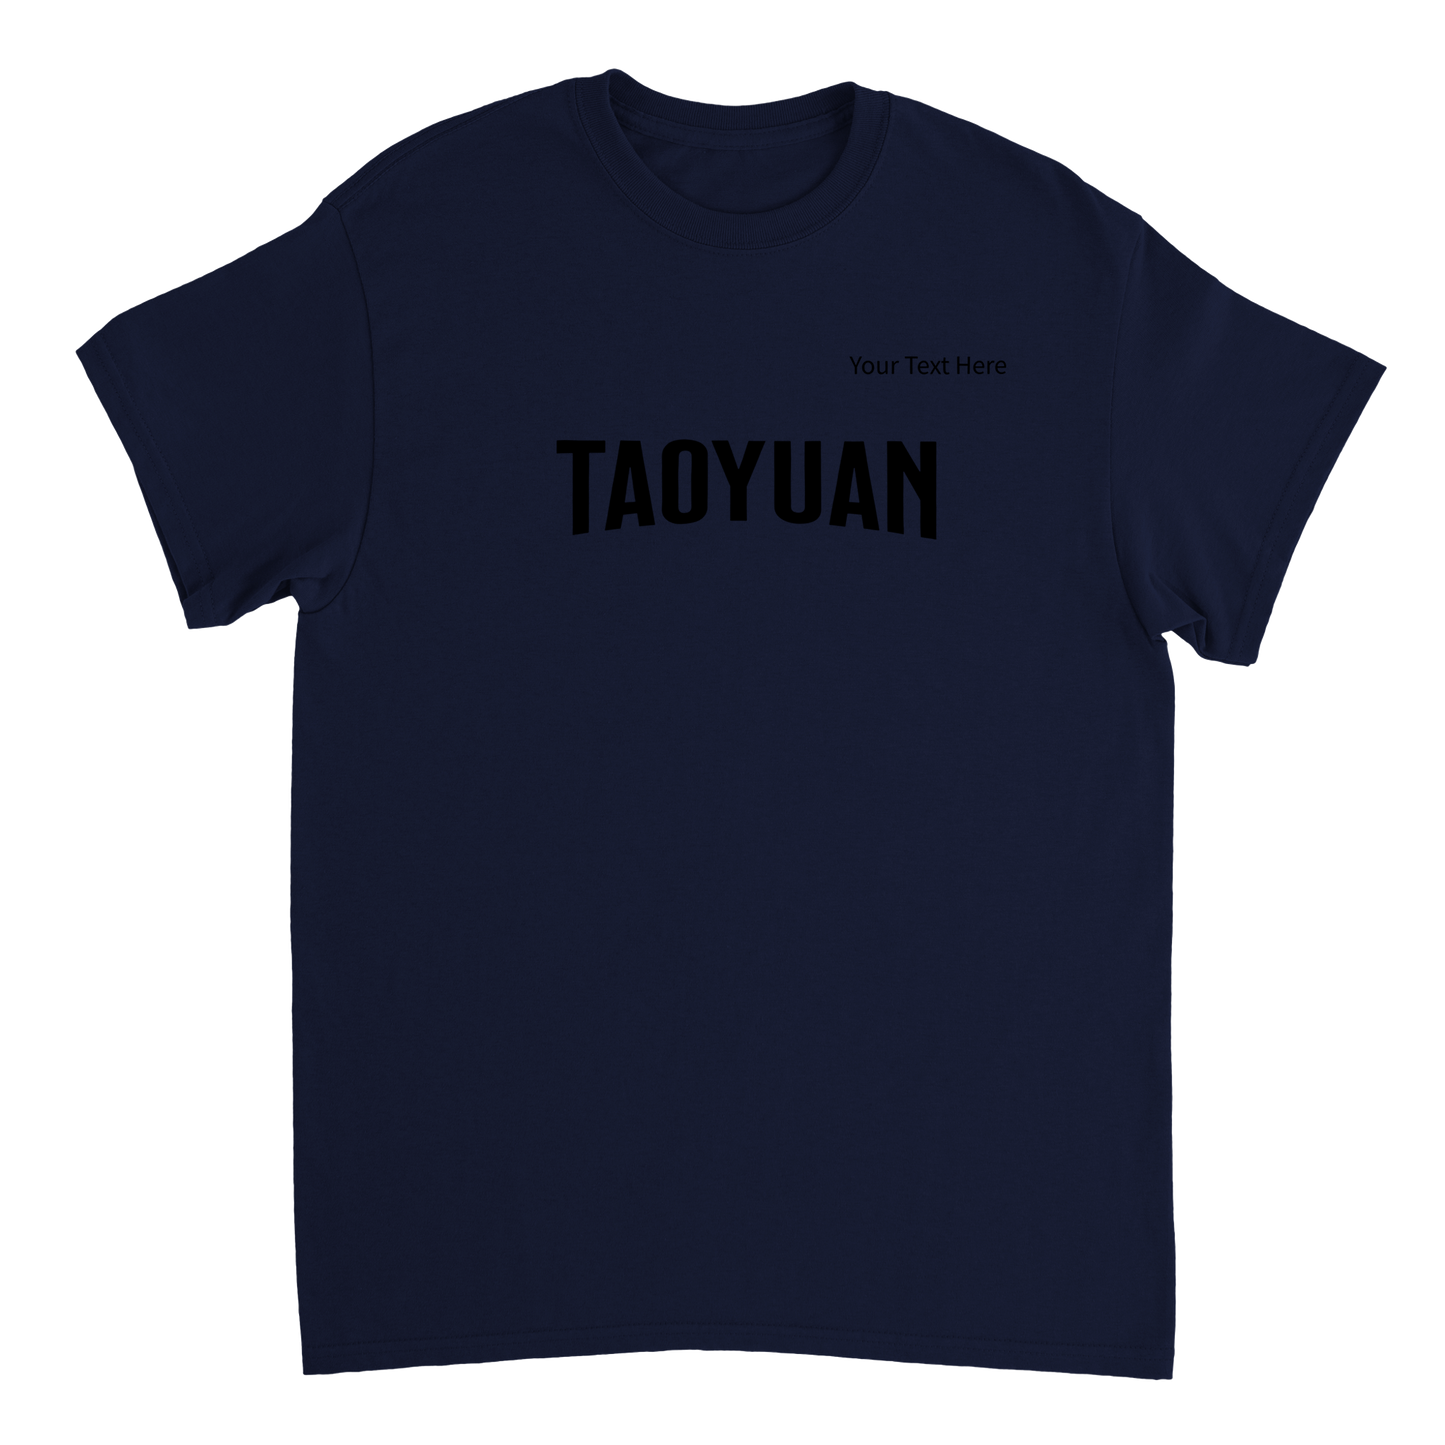 Taoyuan custom text Heavyweight Unisex Crewneck T-shirt